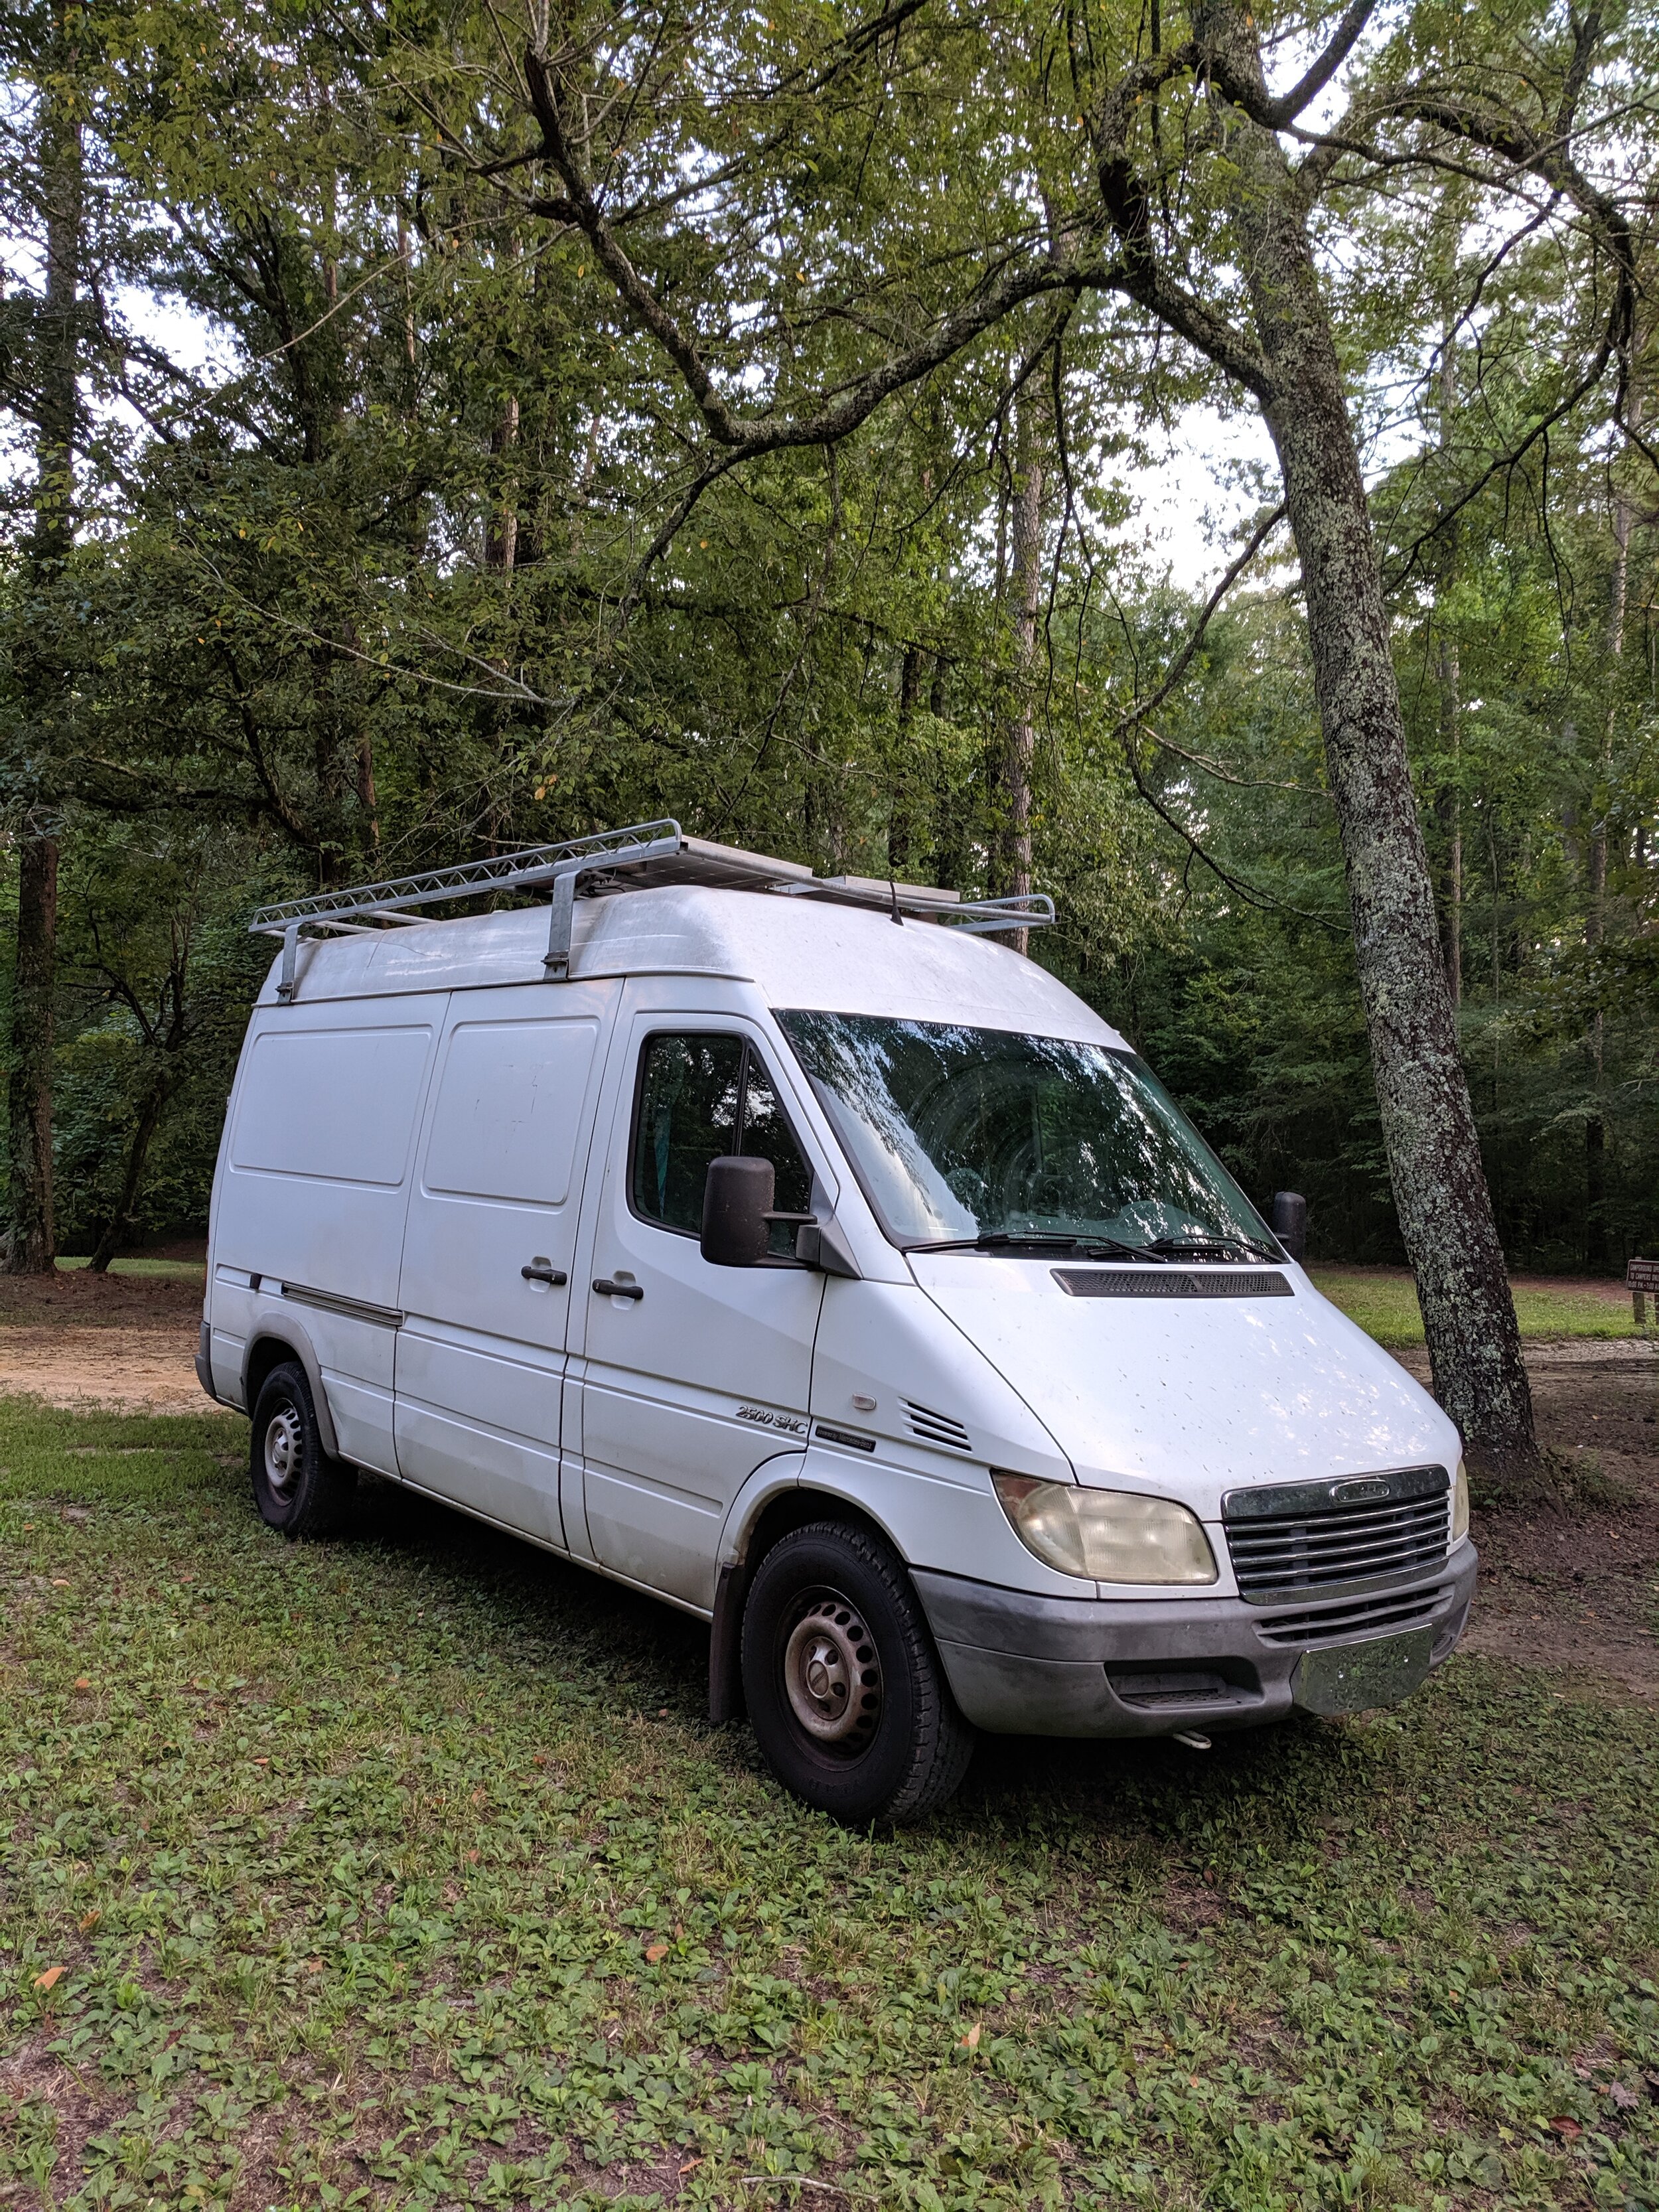  Free campsite in Alabama 